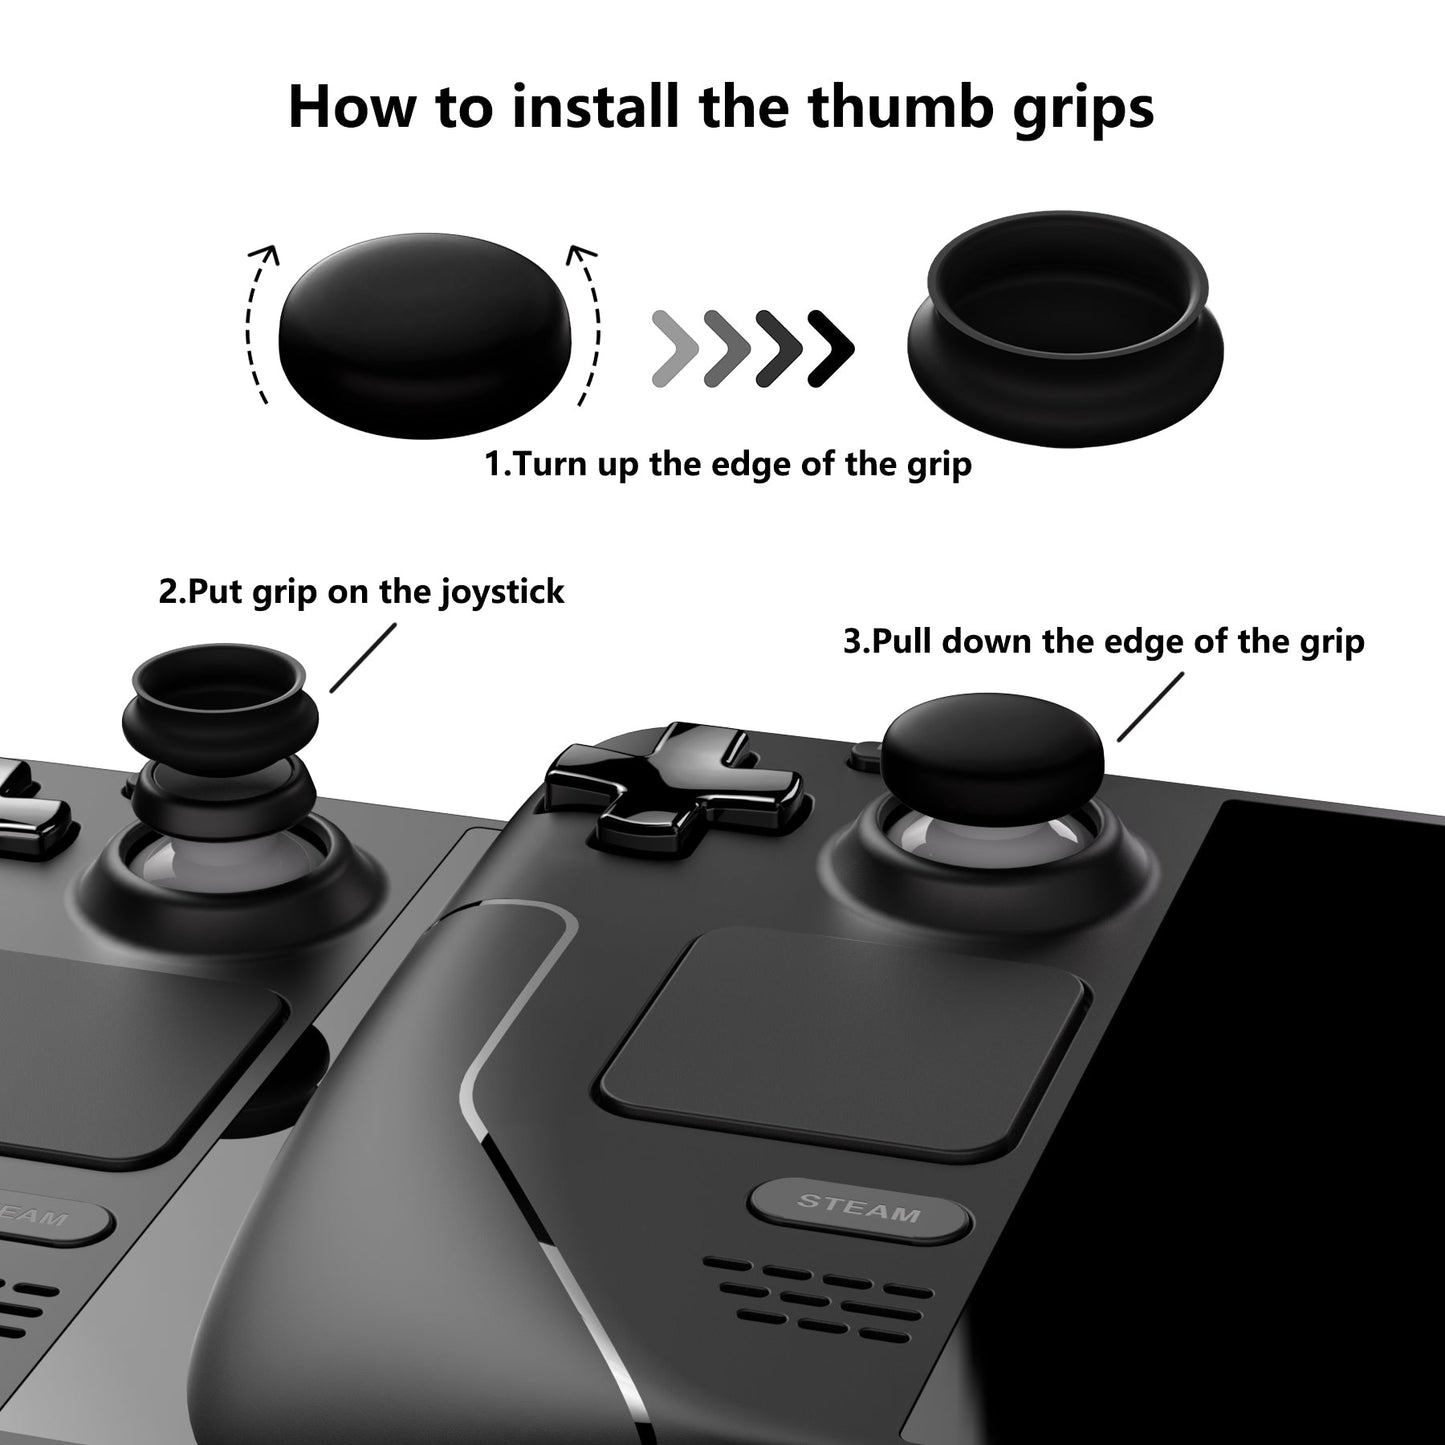 PlayVital White Thumb Grip Caps for Steam Deck, Silicone Thumbsticks Grips Joystick Caps for Steam Deck - Samurai & Guardian Edition - YFSDM014 PlayVital